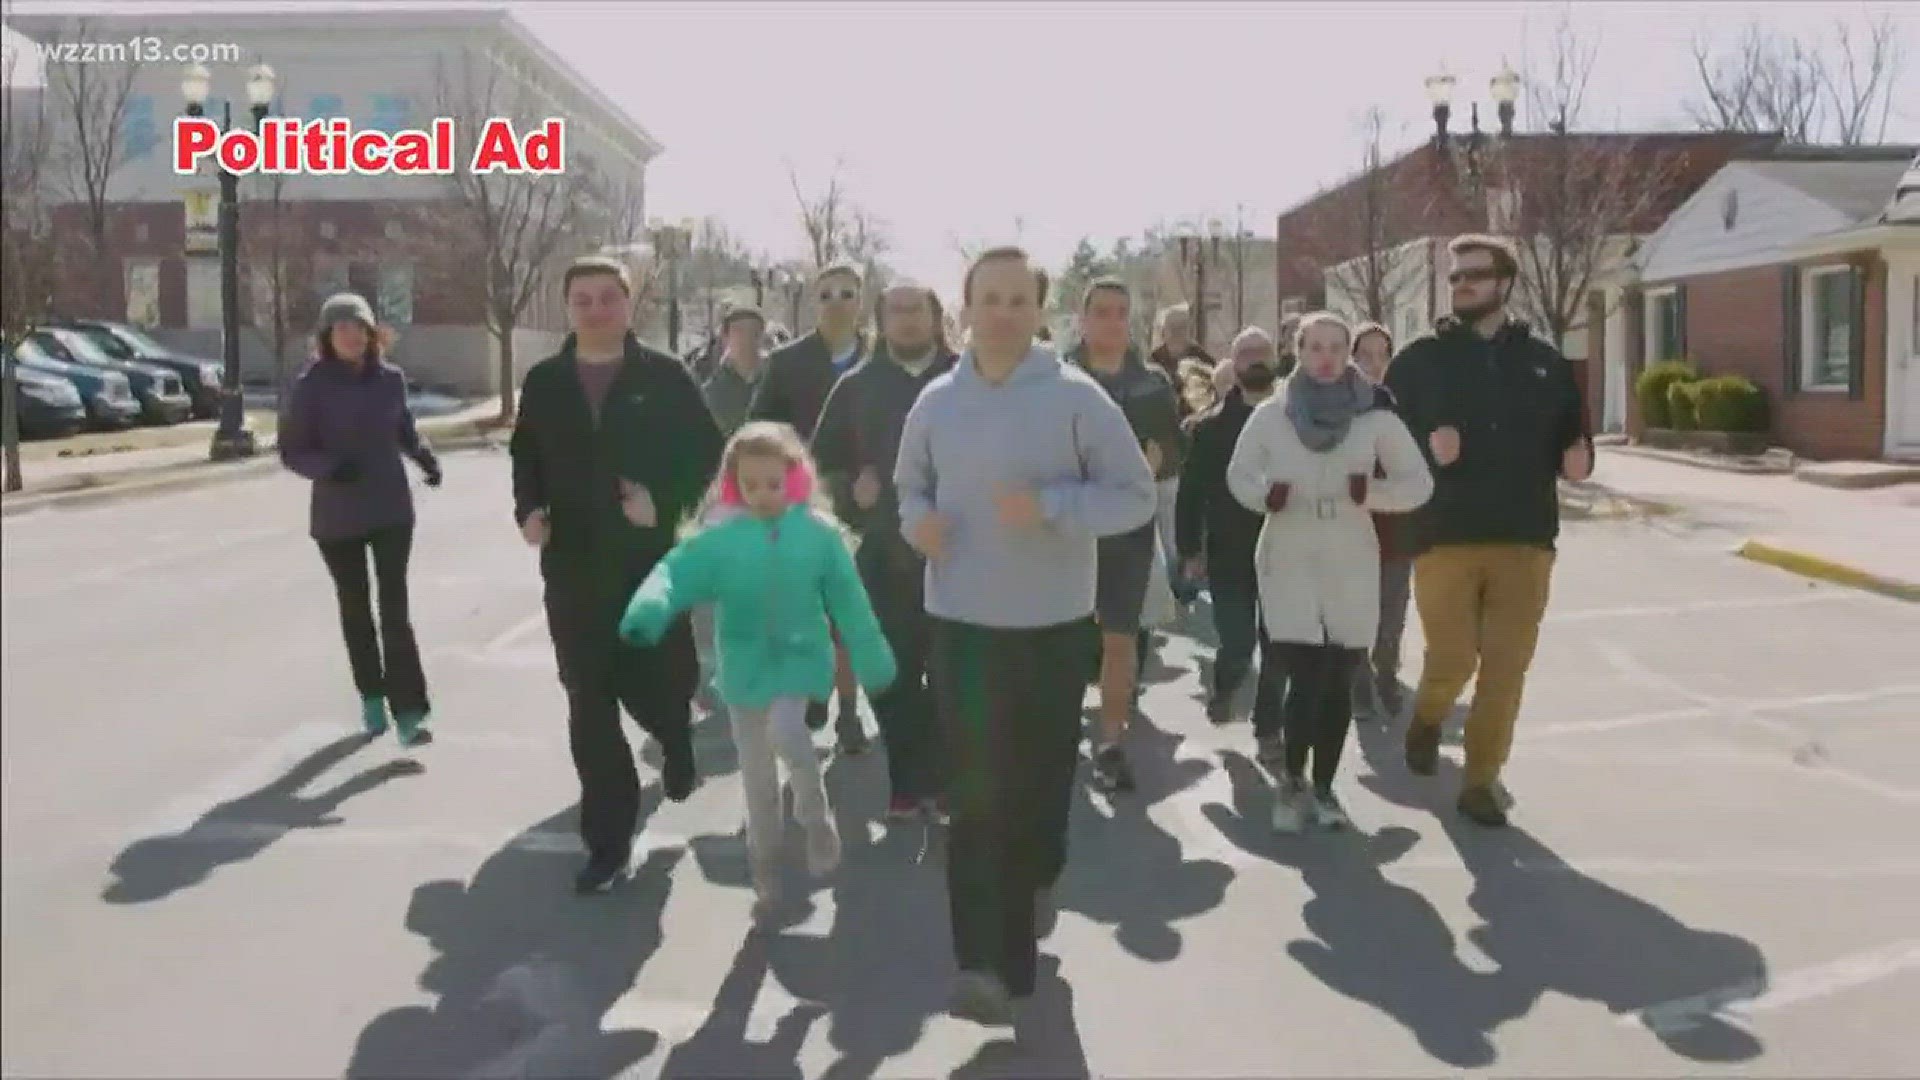 GOP candidates start airng election ads